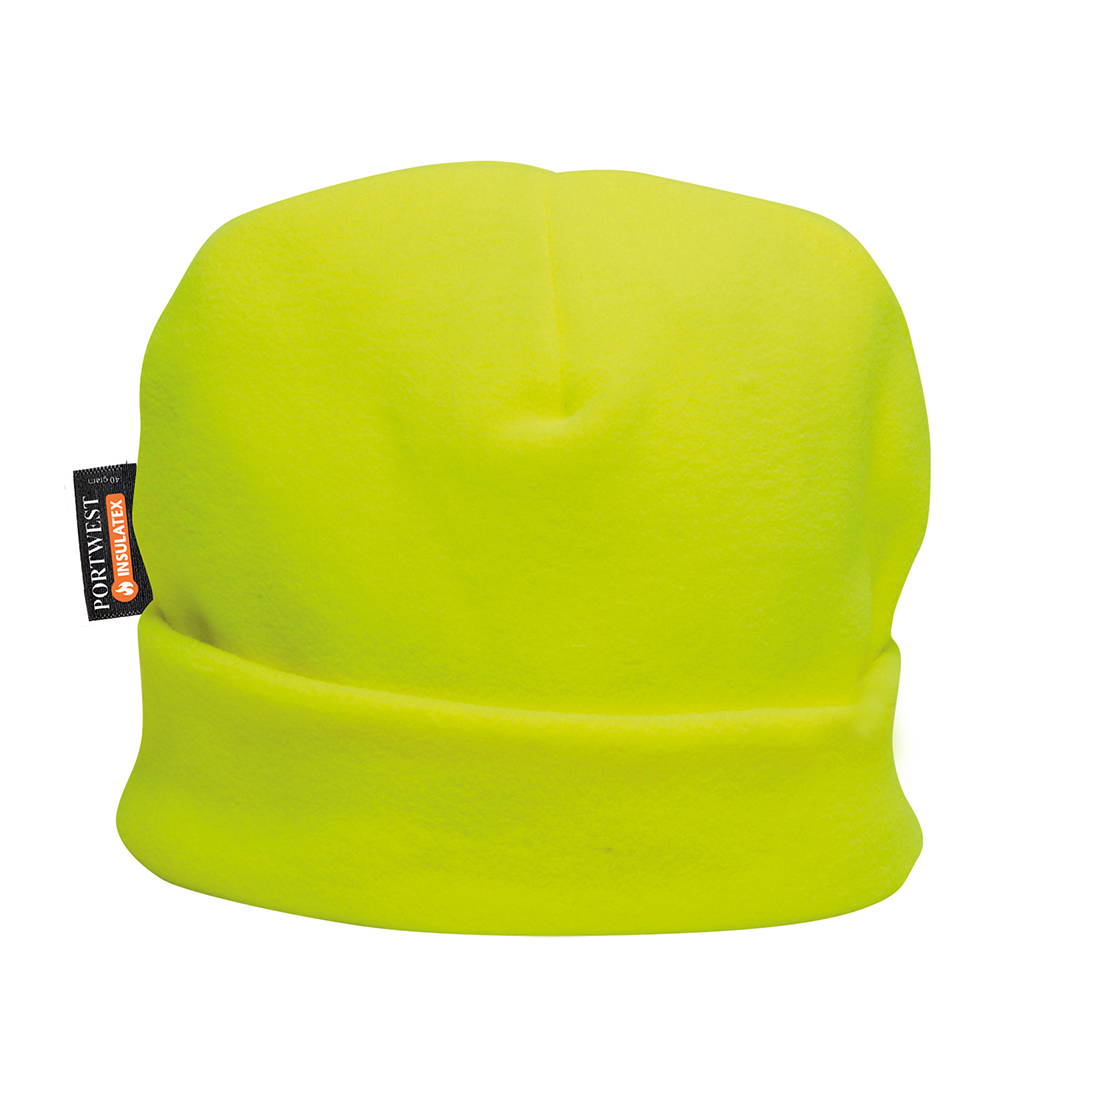 Fleece Hat Insulatex Lined Size  Yellow